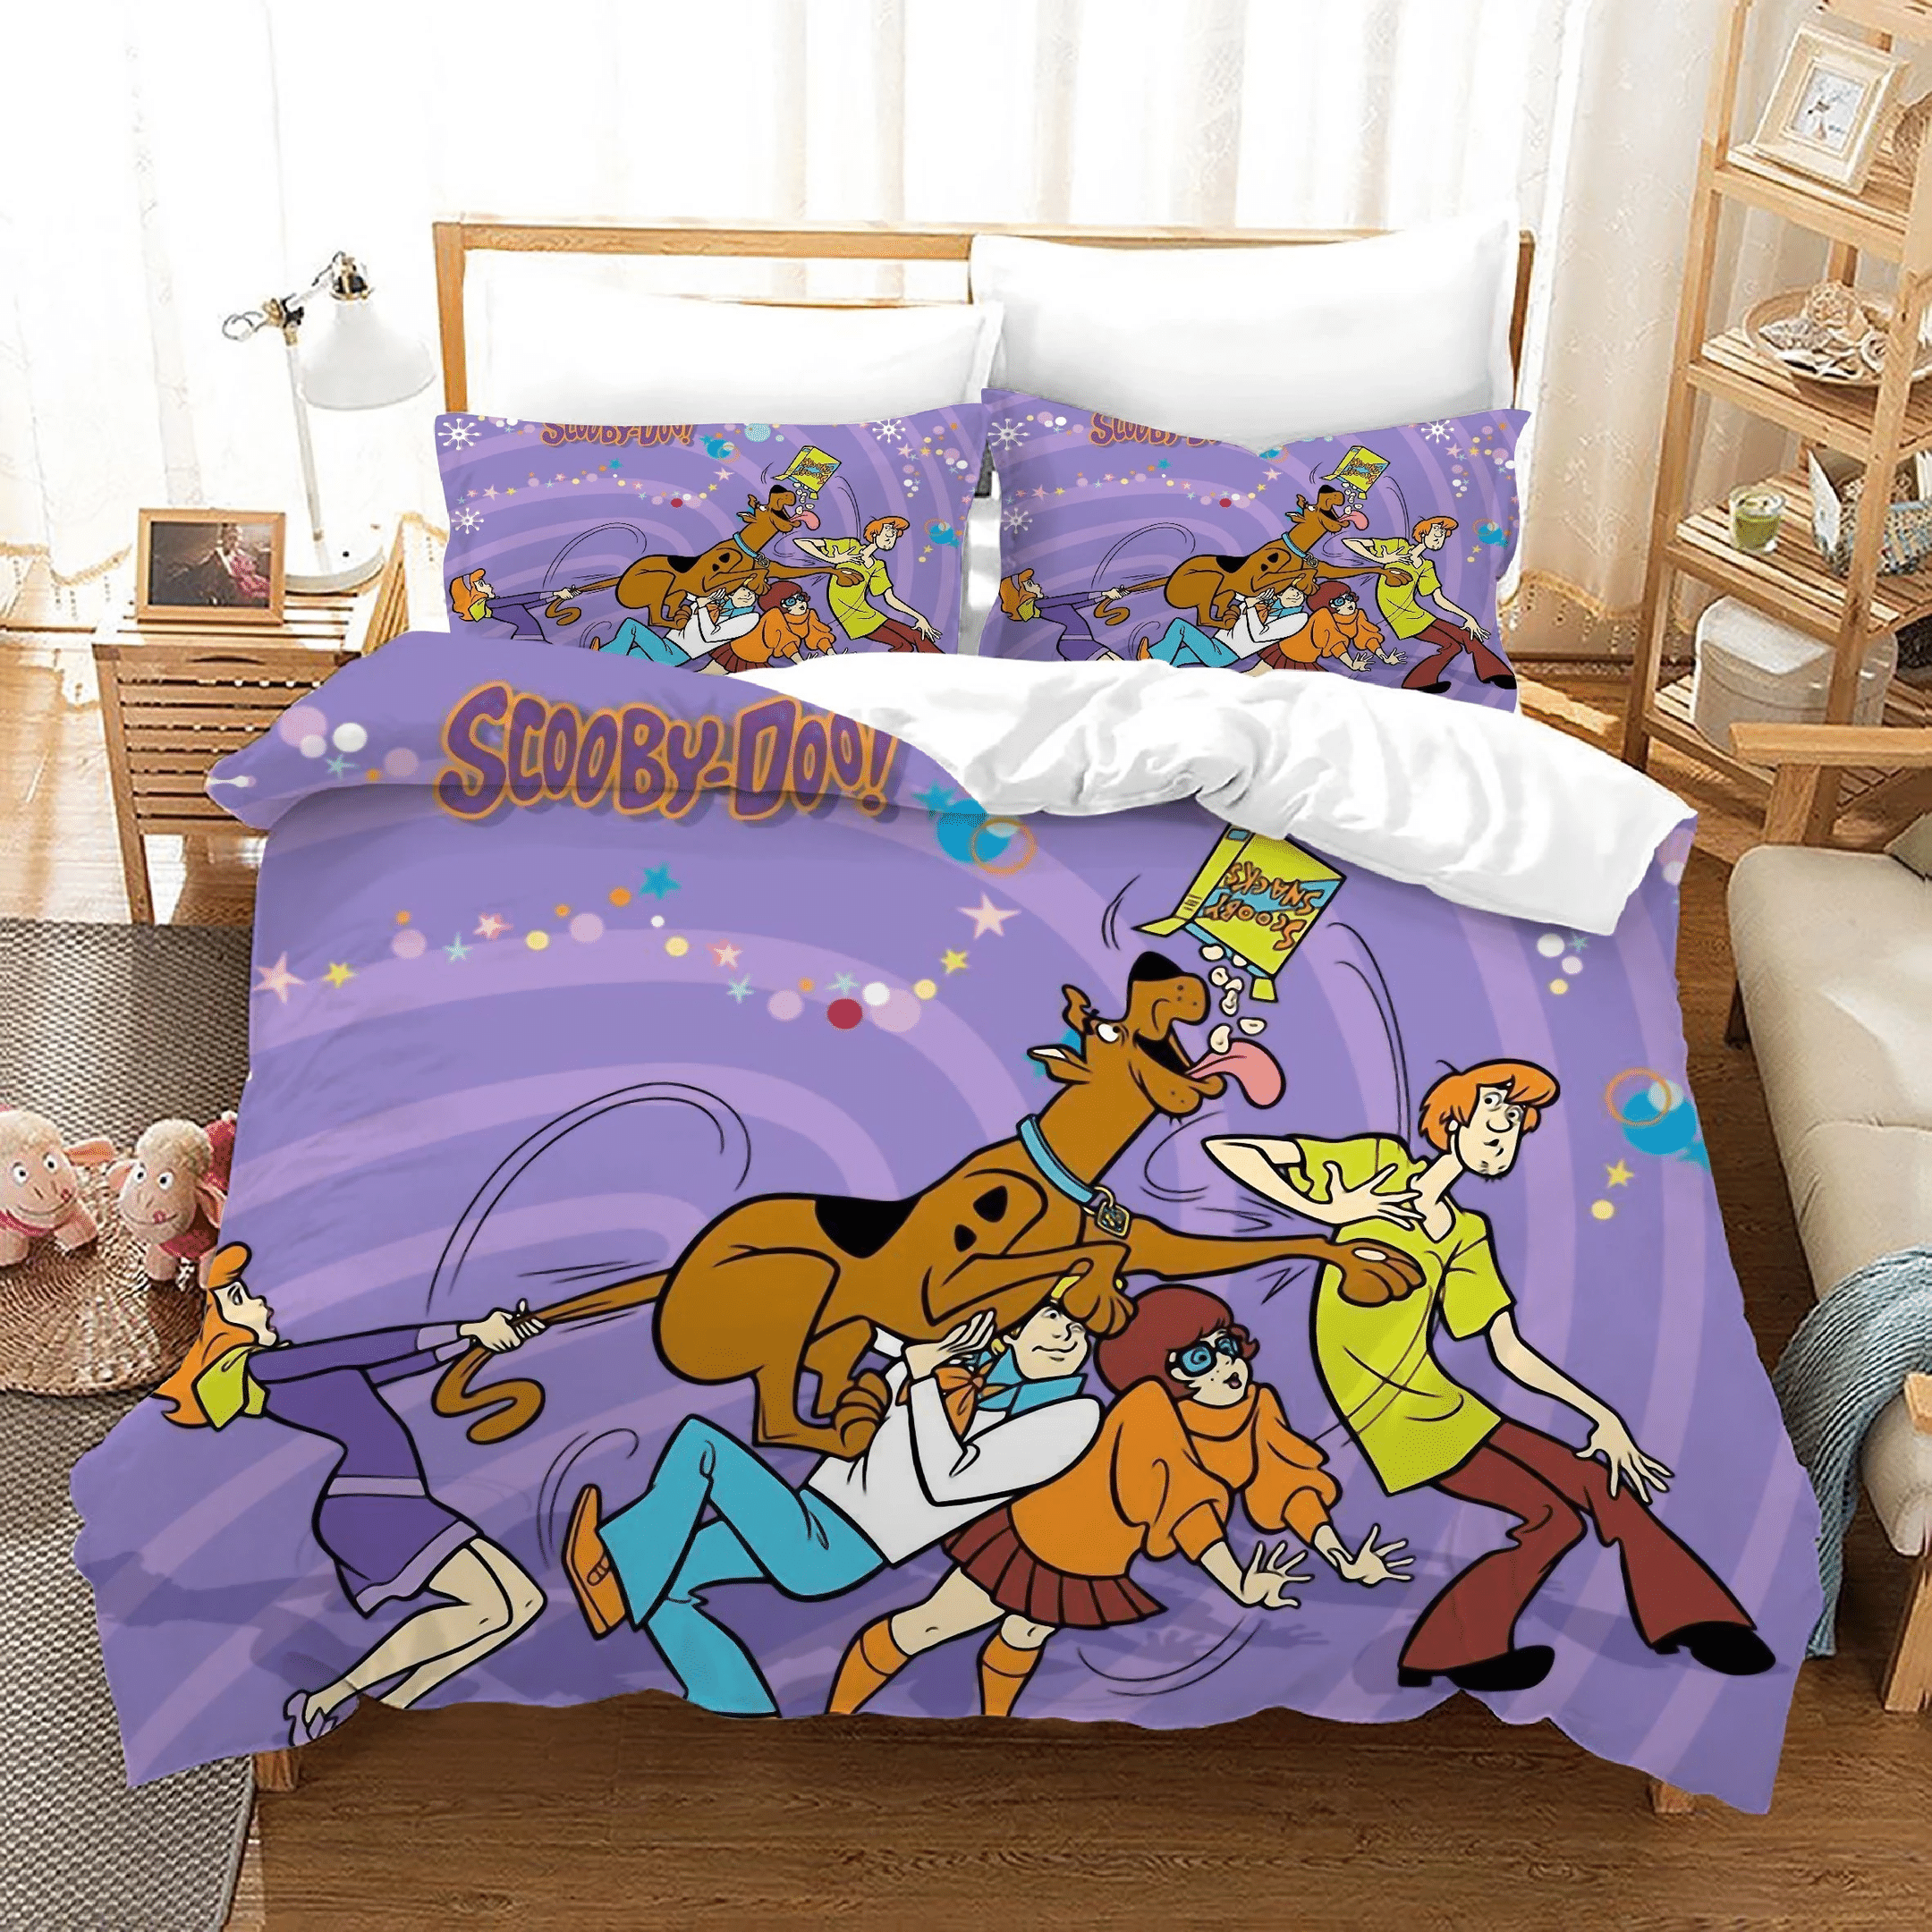 Scooby Doo 5 Duvet Cover Pillowcase Bedding Sets Home Bedroom